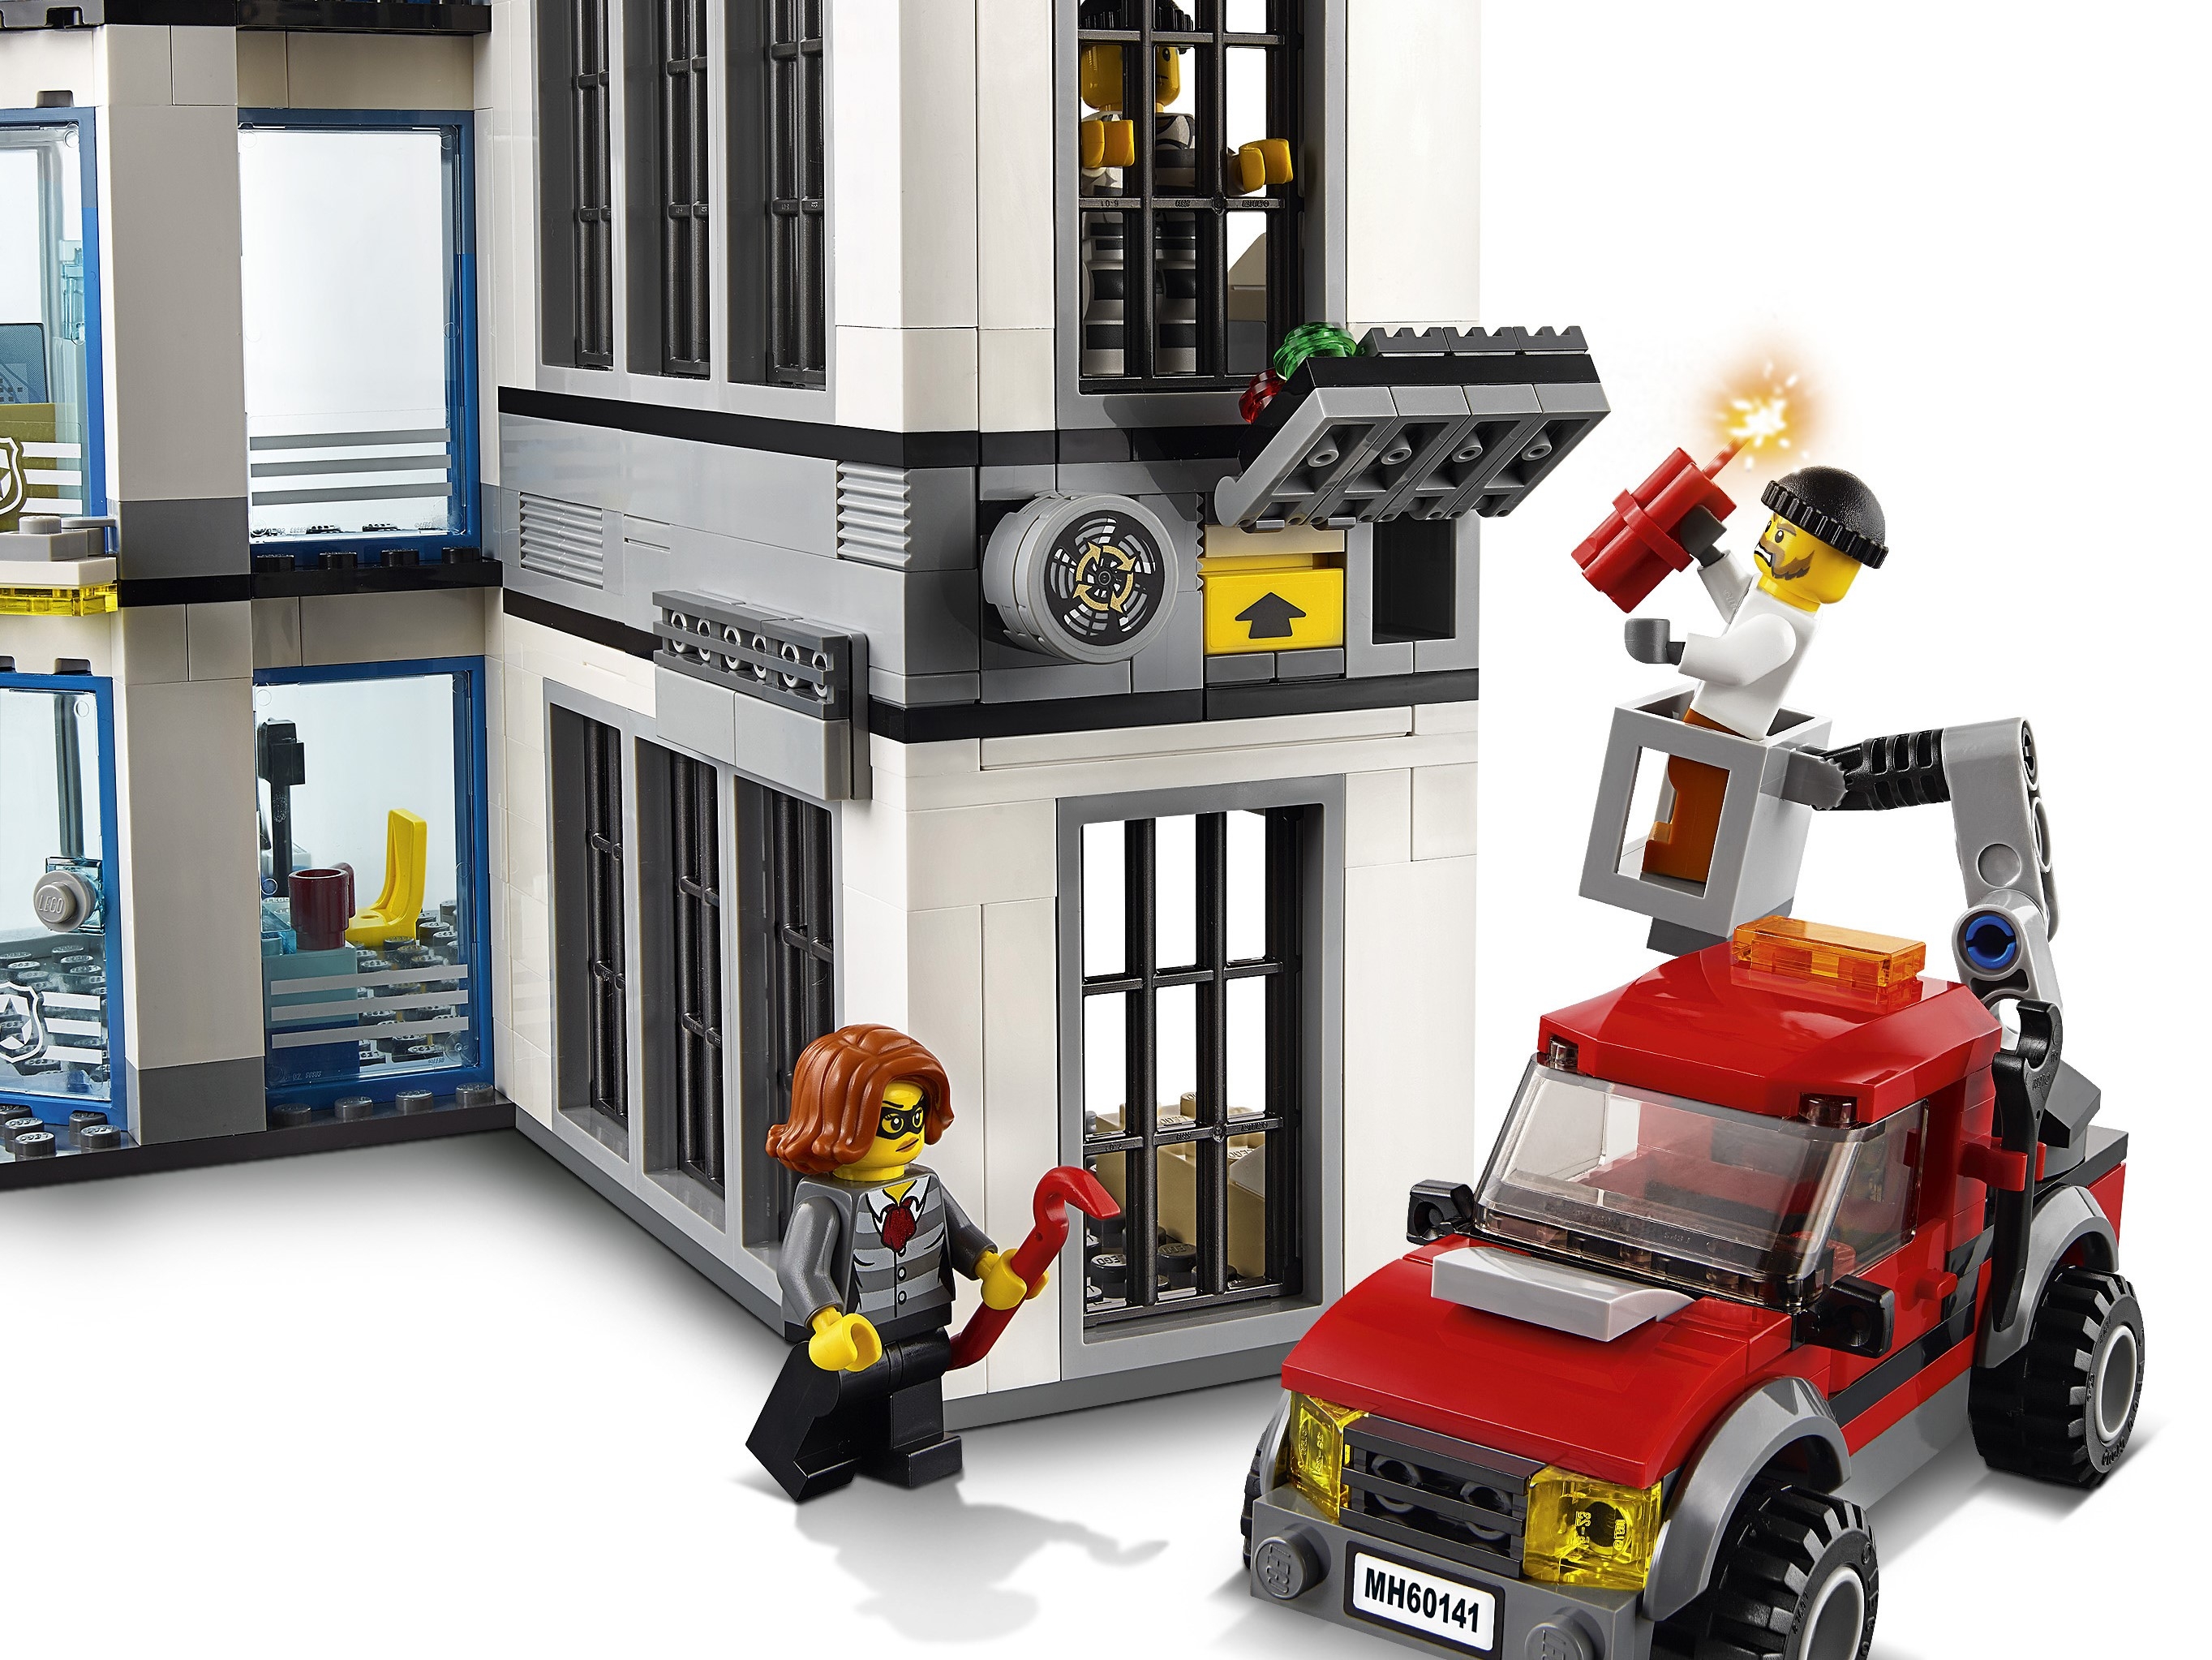 Lego - Le commissariat de police